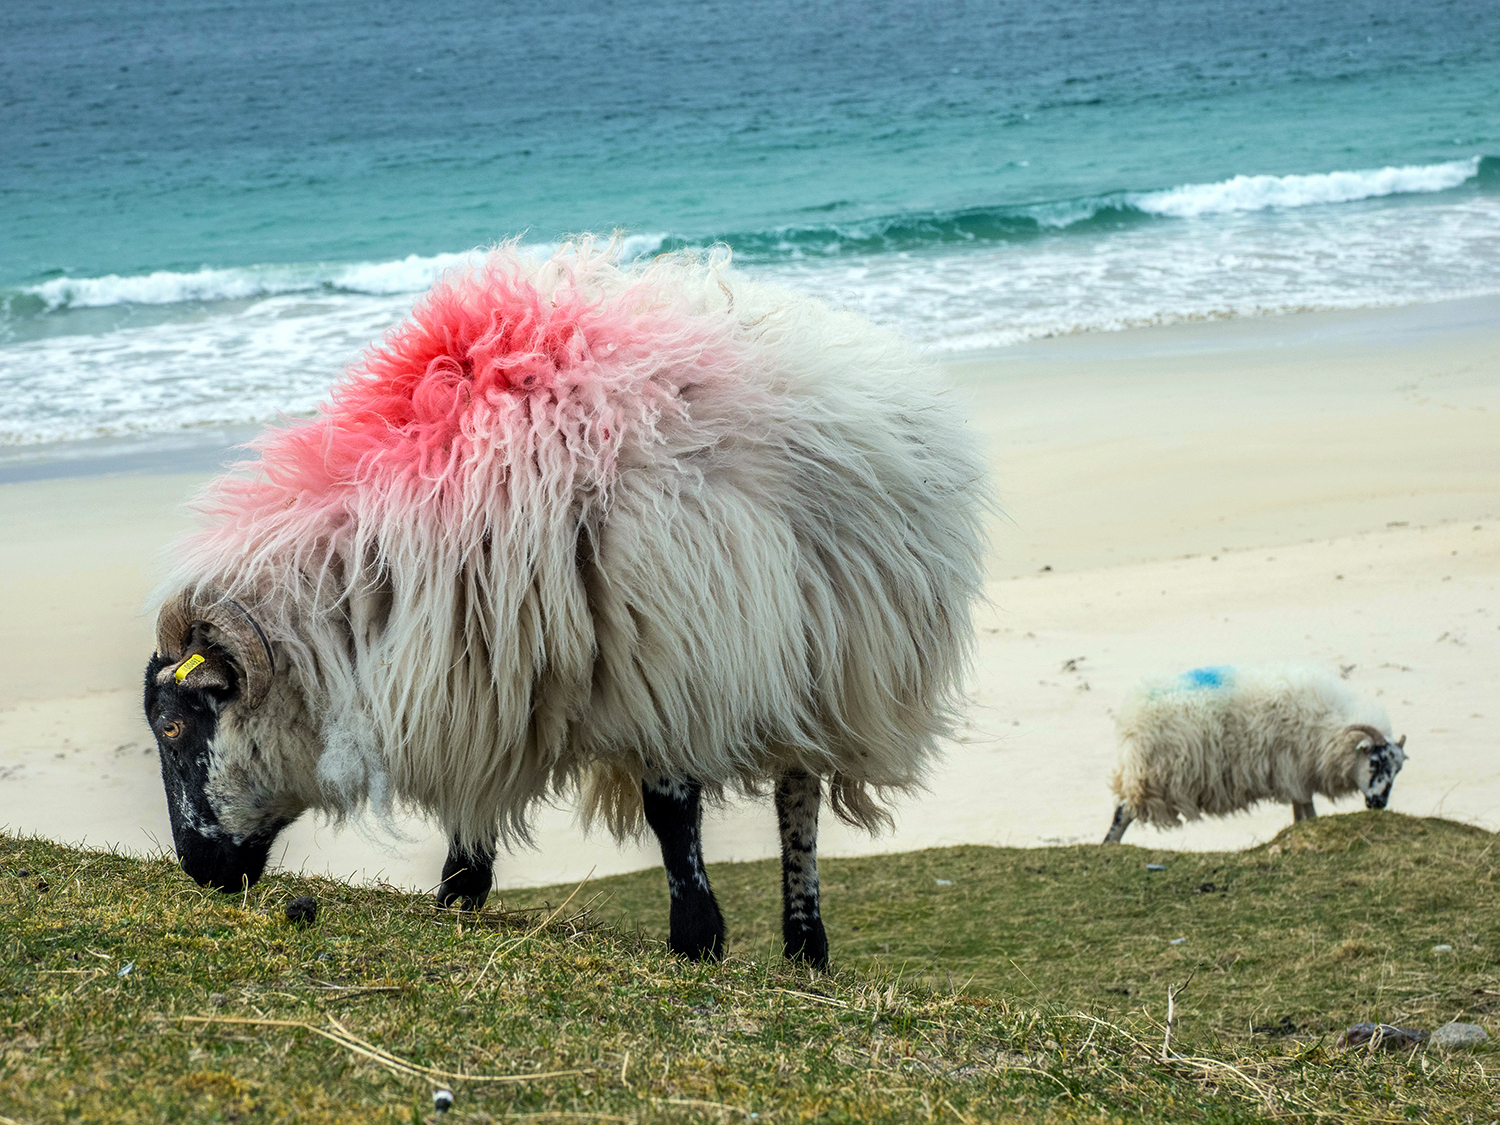 Harris tweed sheep grazing beach